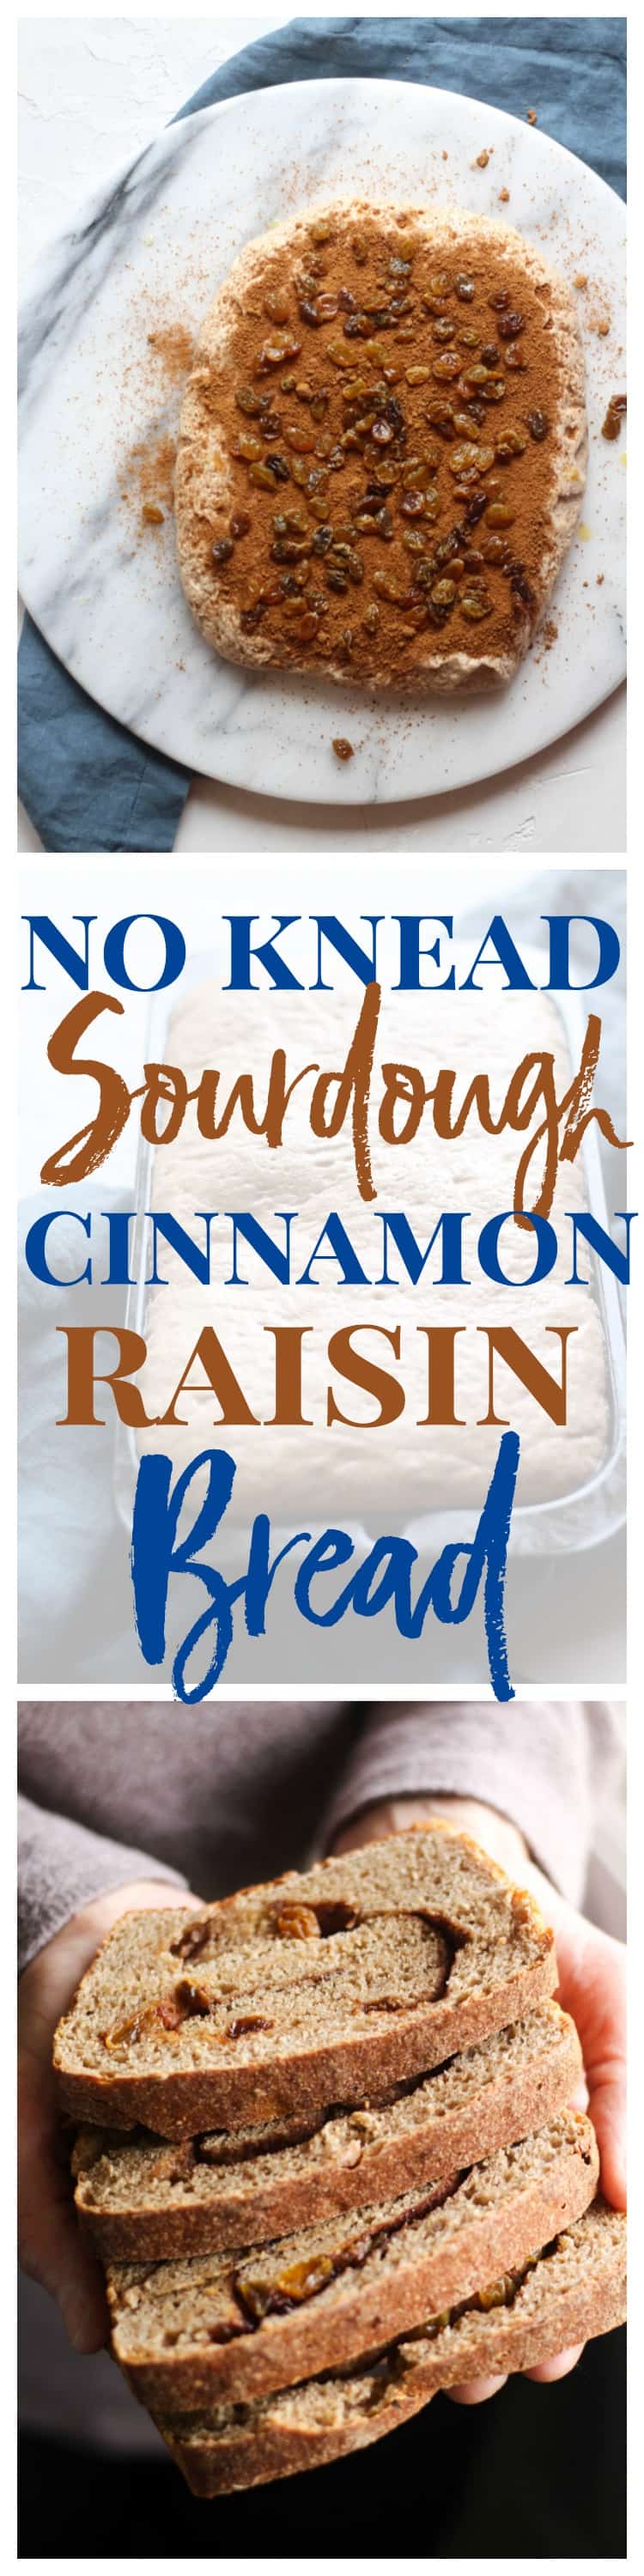 This no knead cinnamon raisin bread